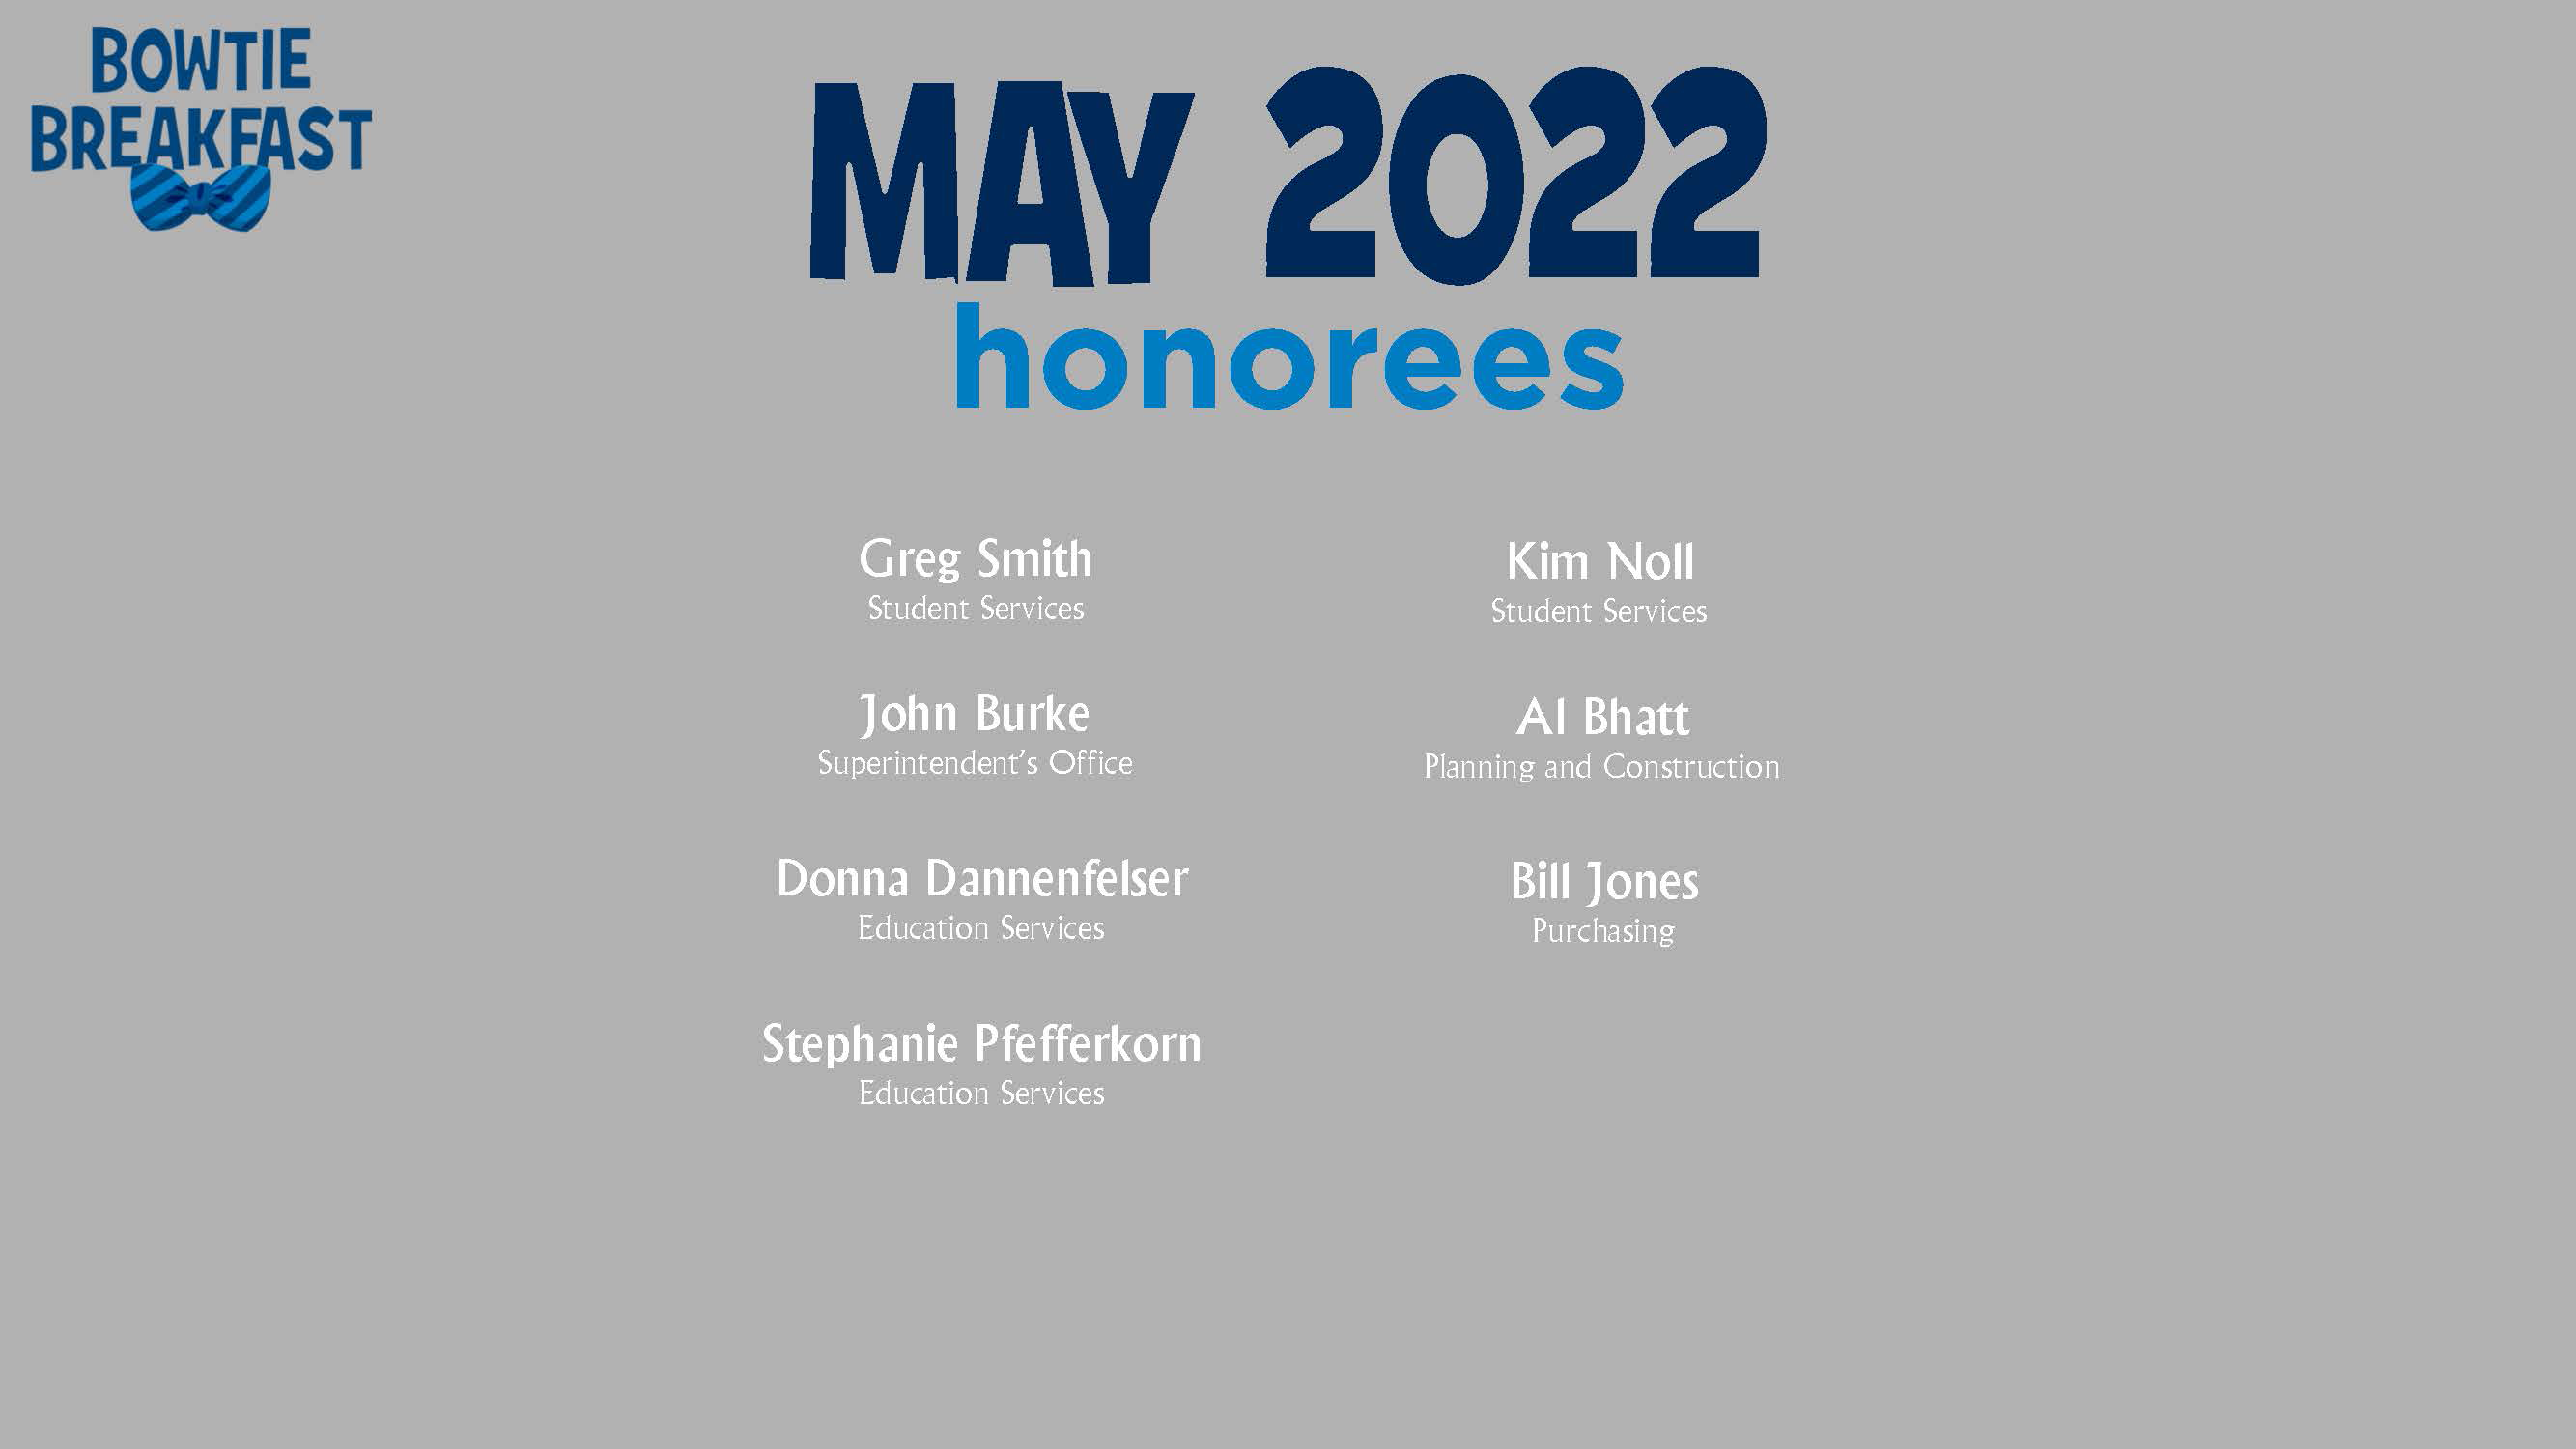 HCPS Bowtie Breakfast Honorees - May 2022